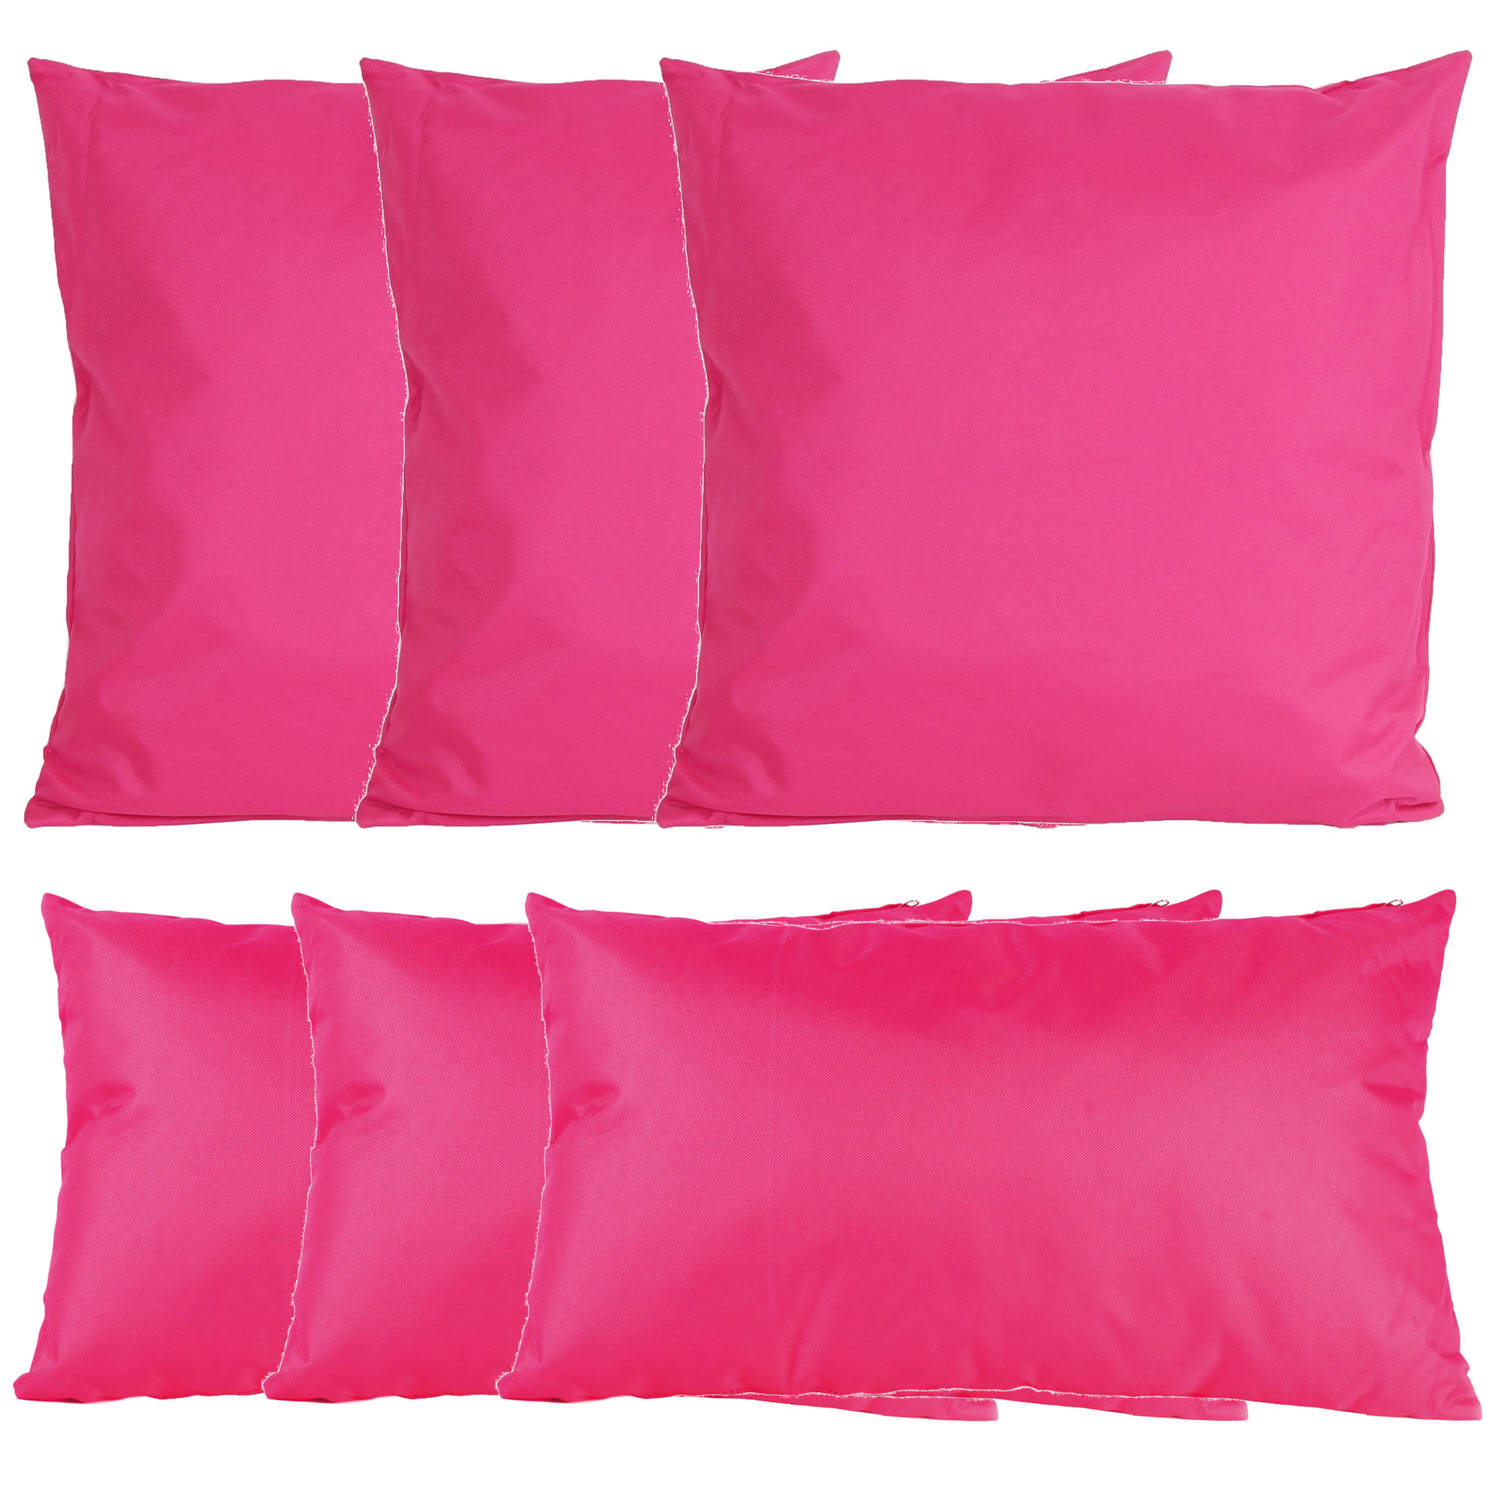 Bank-tuin kussens set binnen-buiten 6x stuks fuchsia roze In 2 formaten laag-hoog Sierkussens